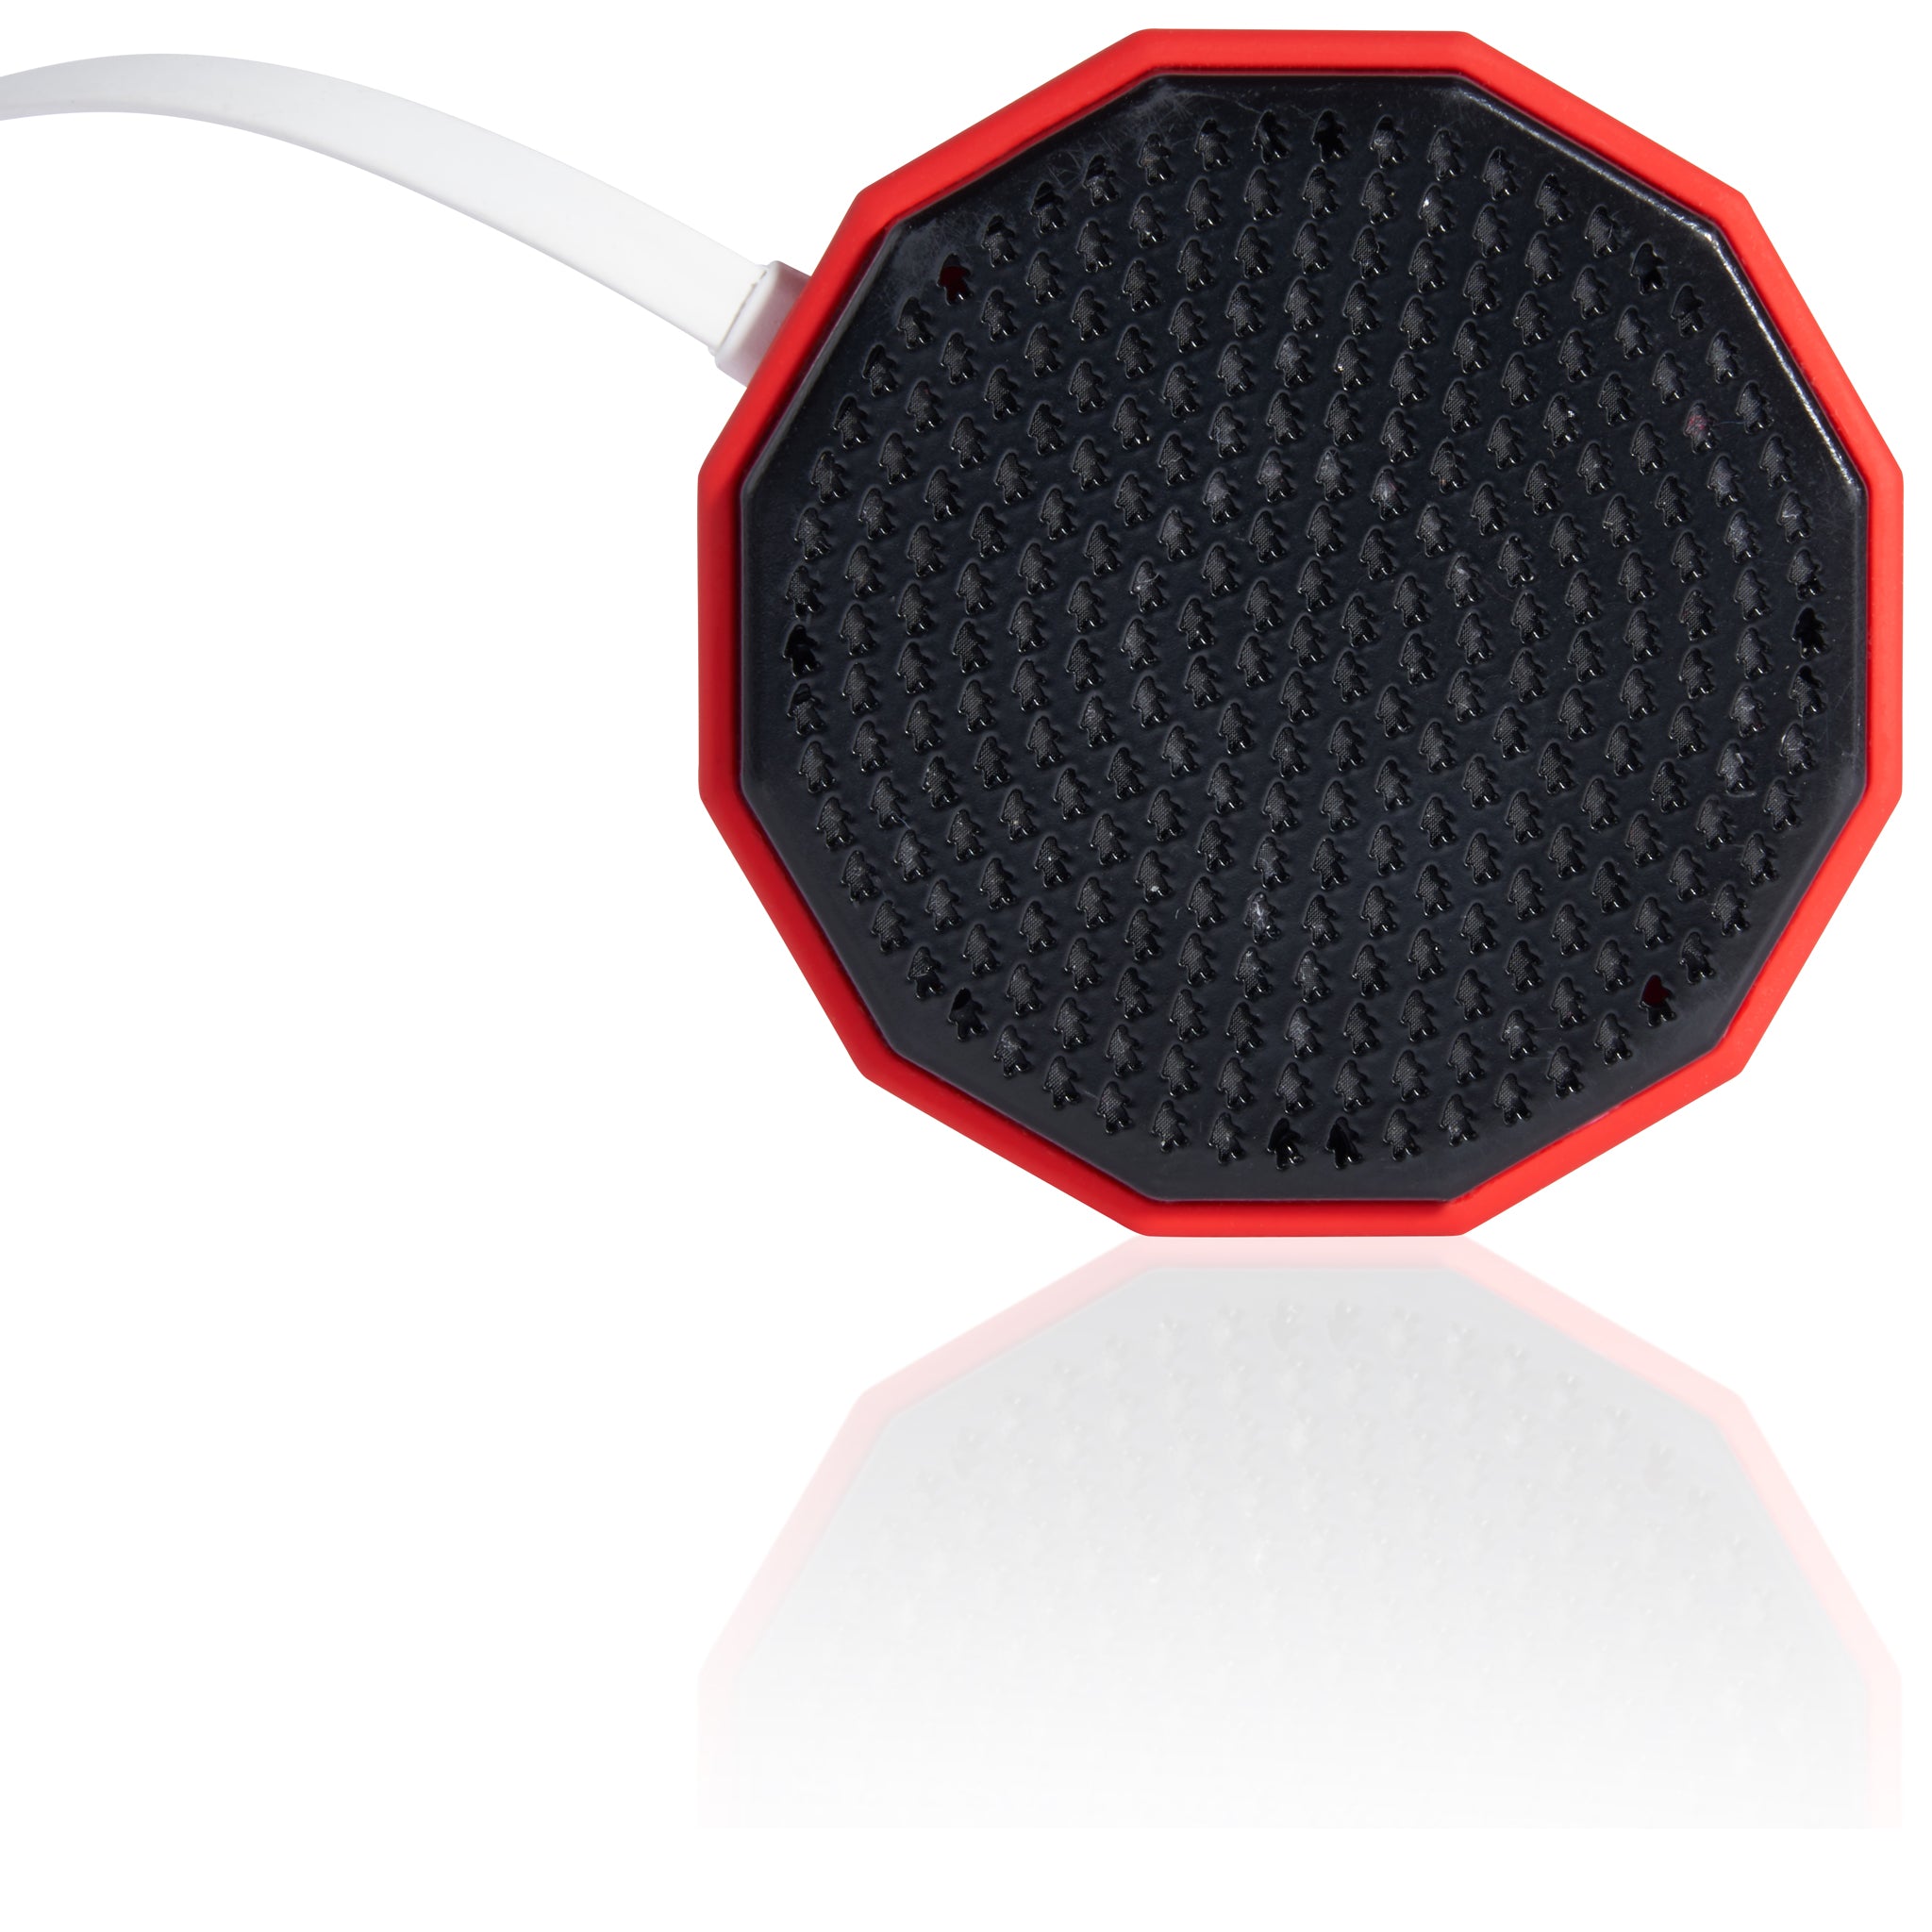 Chips® 3.0 - Ski Helmet Headphones